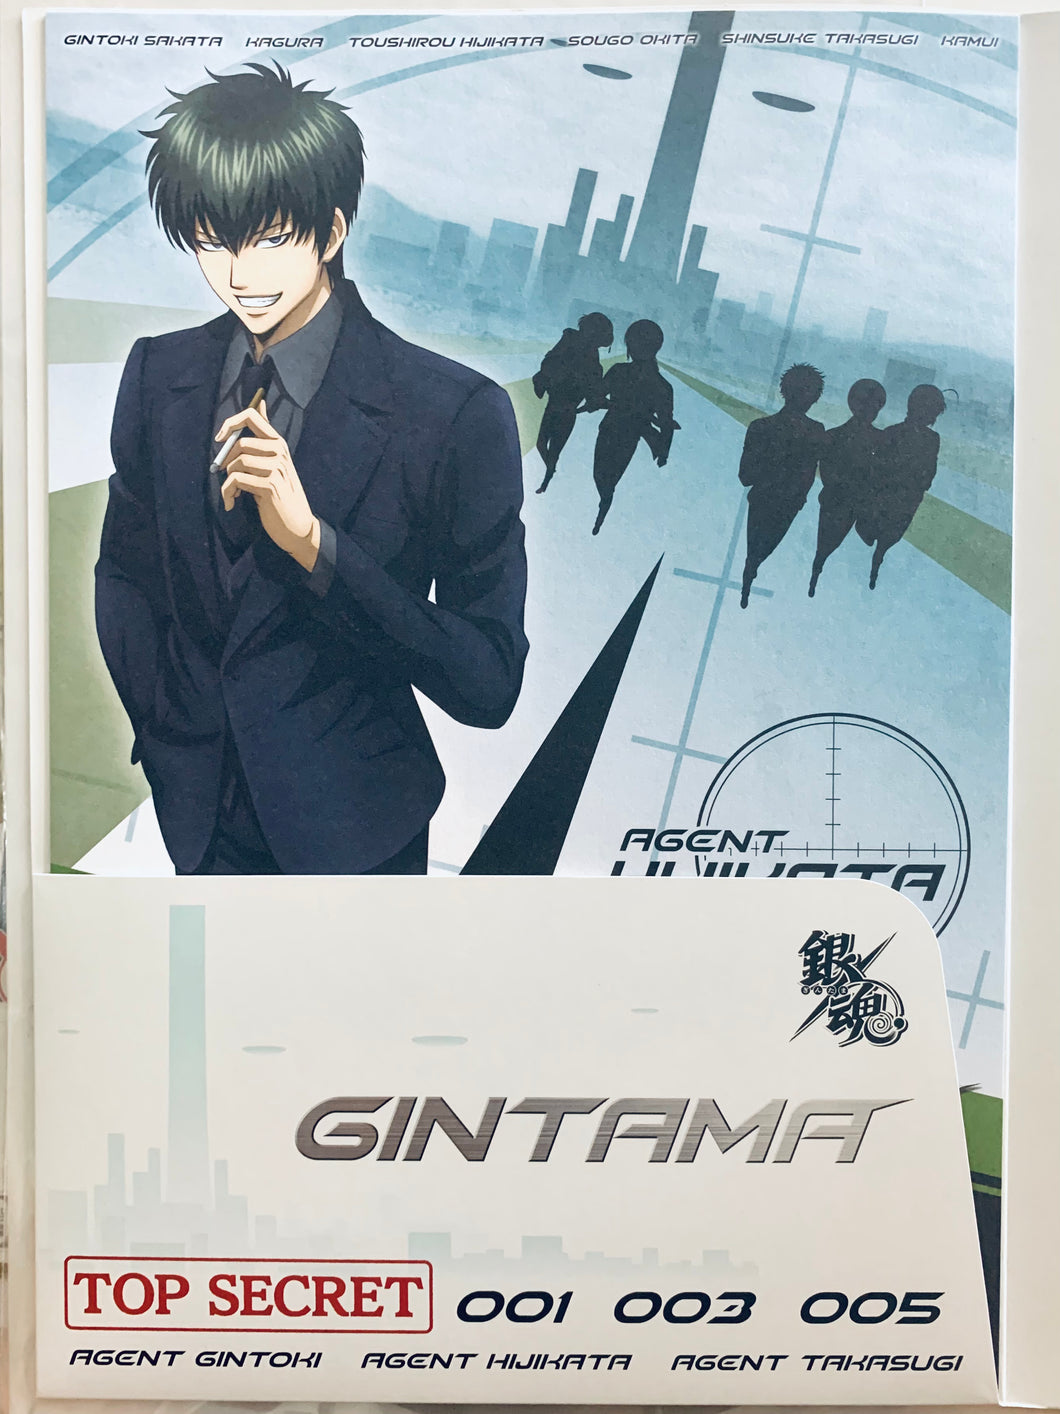 Gintama - Hijikata Toushirou / Agent 003 - Portrait - Anikuji Vol. 8 - Top Secret Mission! SPY Edition - C-1 Prize